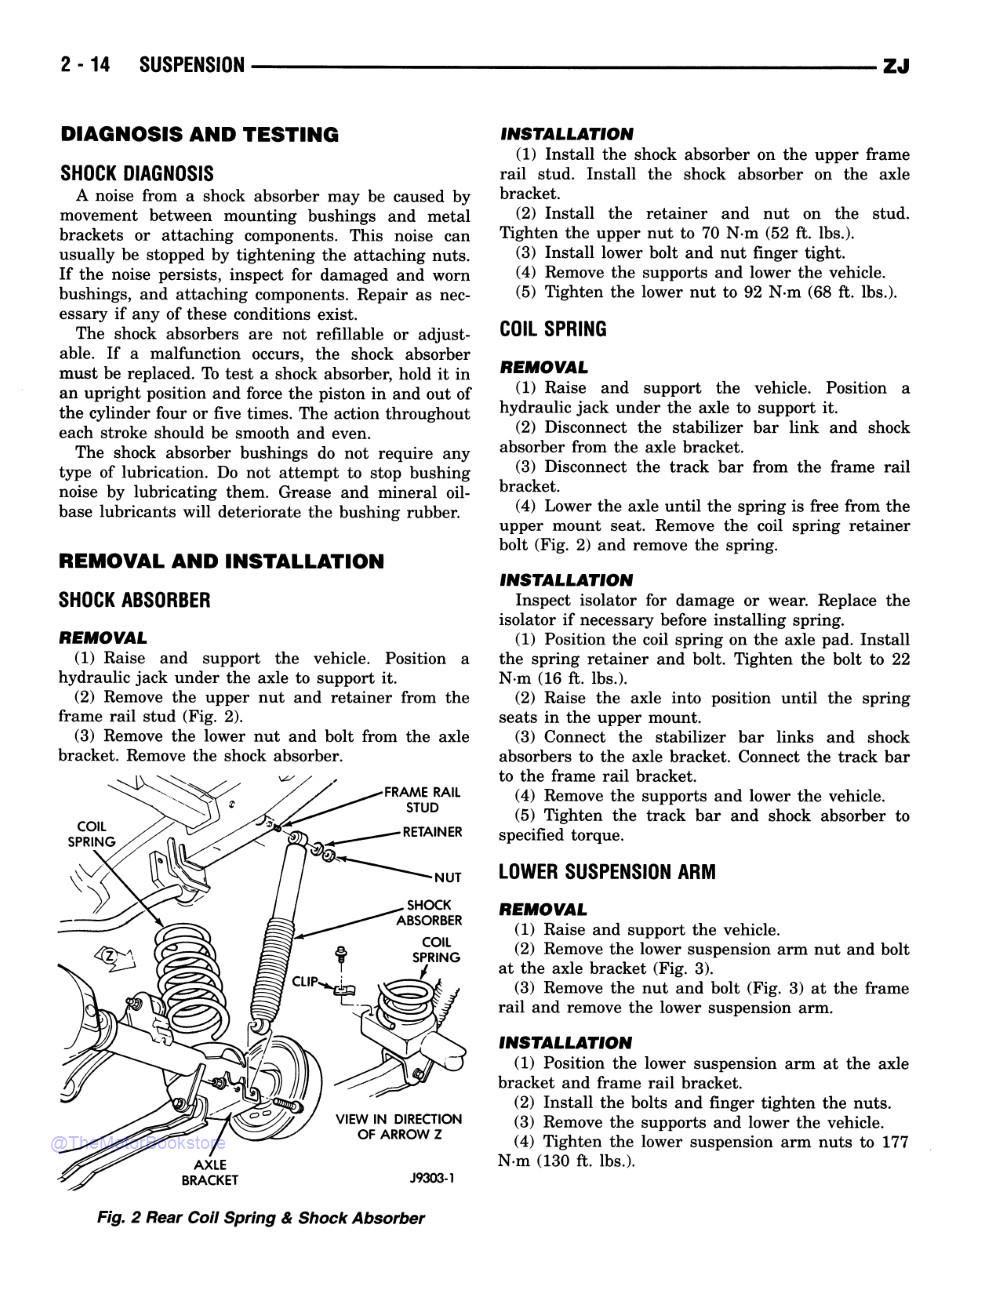 1997 Jeep Grand Cherokee Shop Manual - Sample Page 1